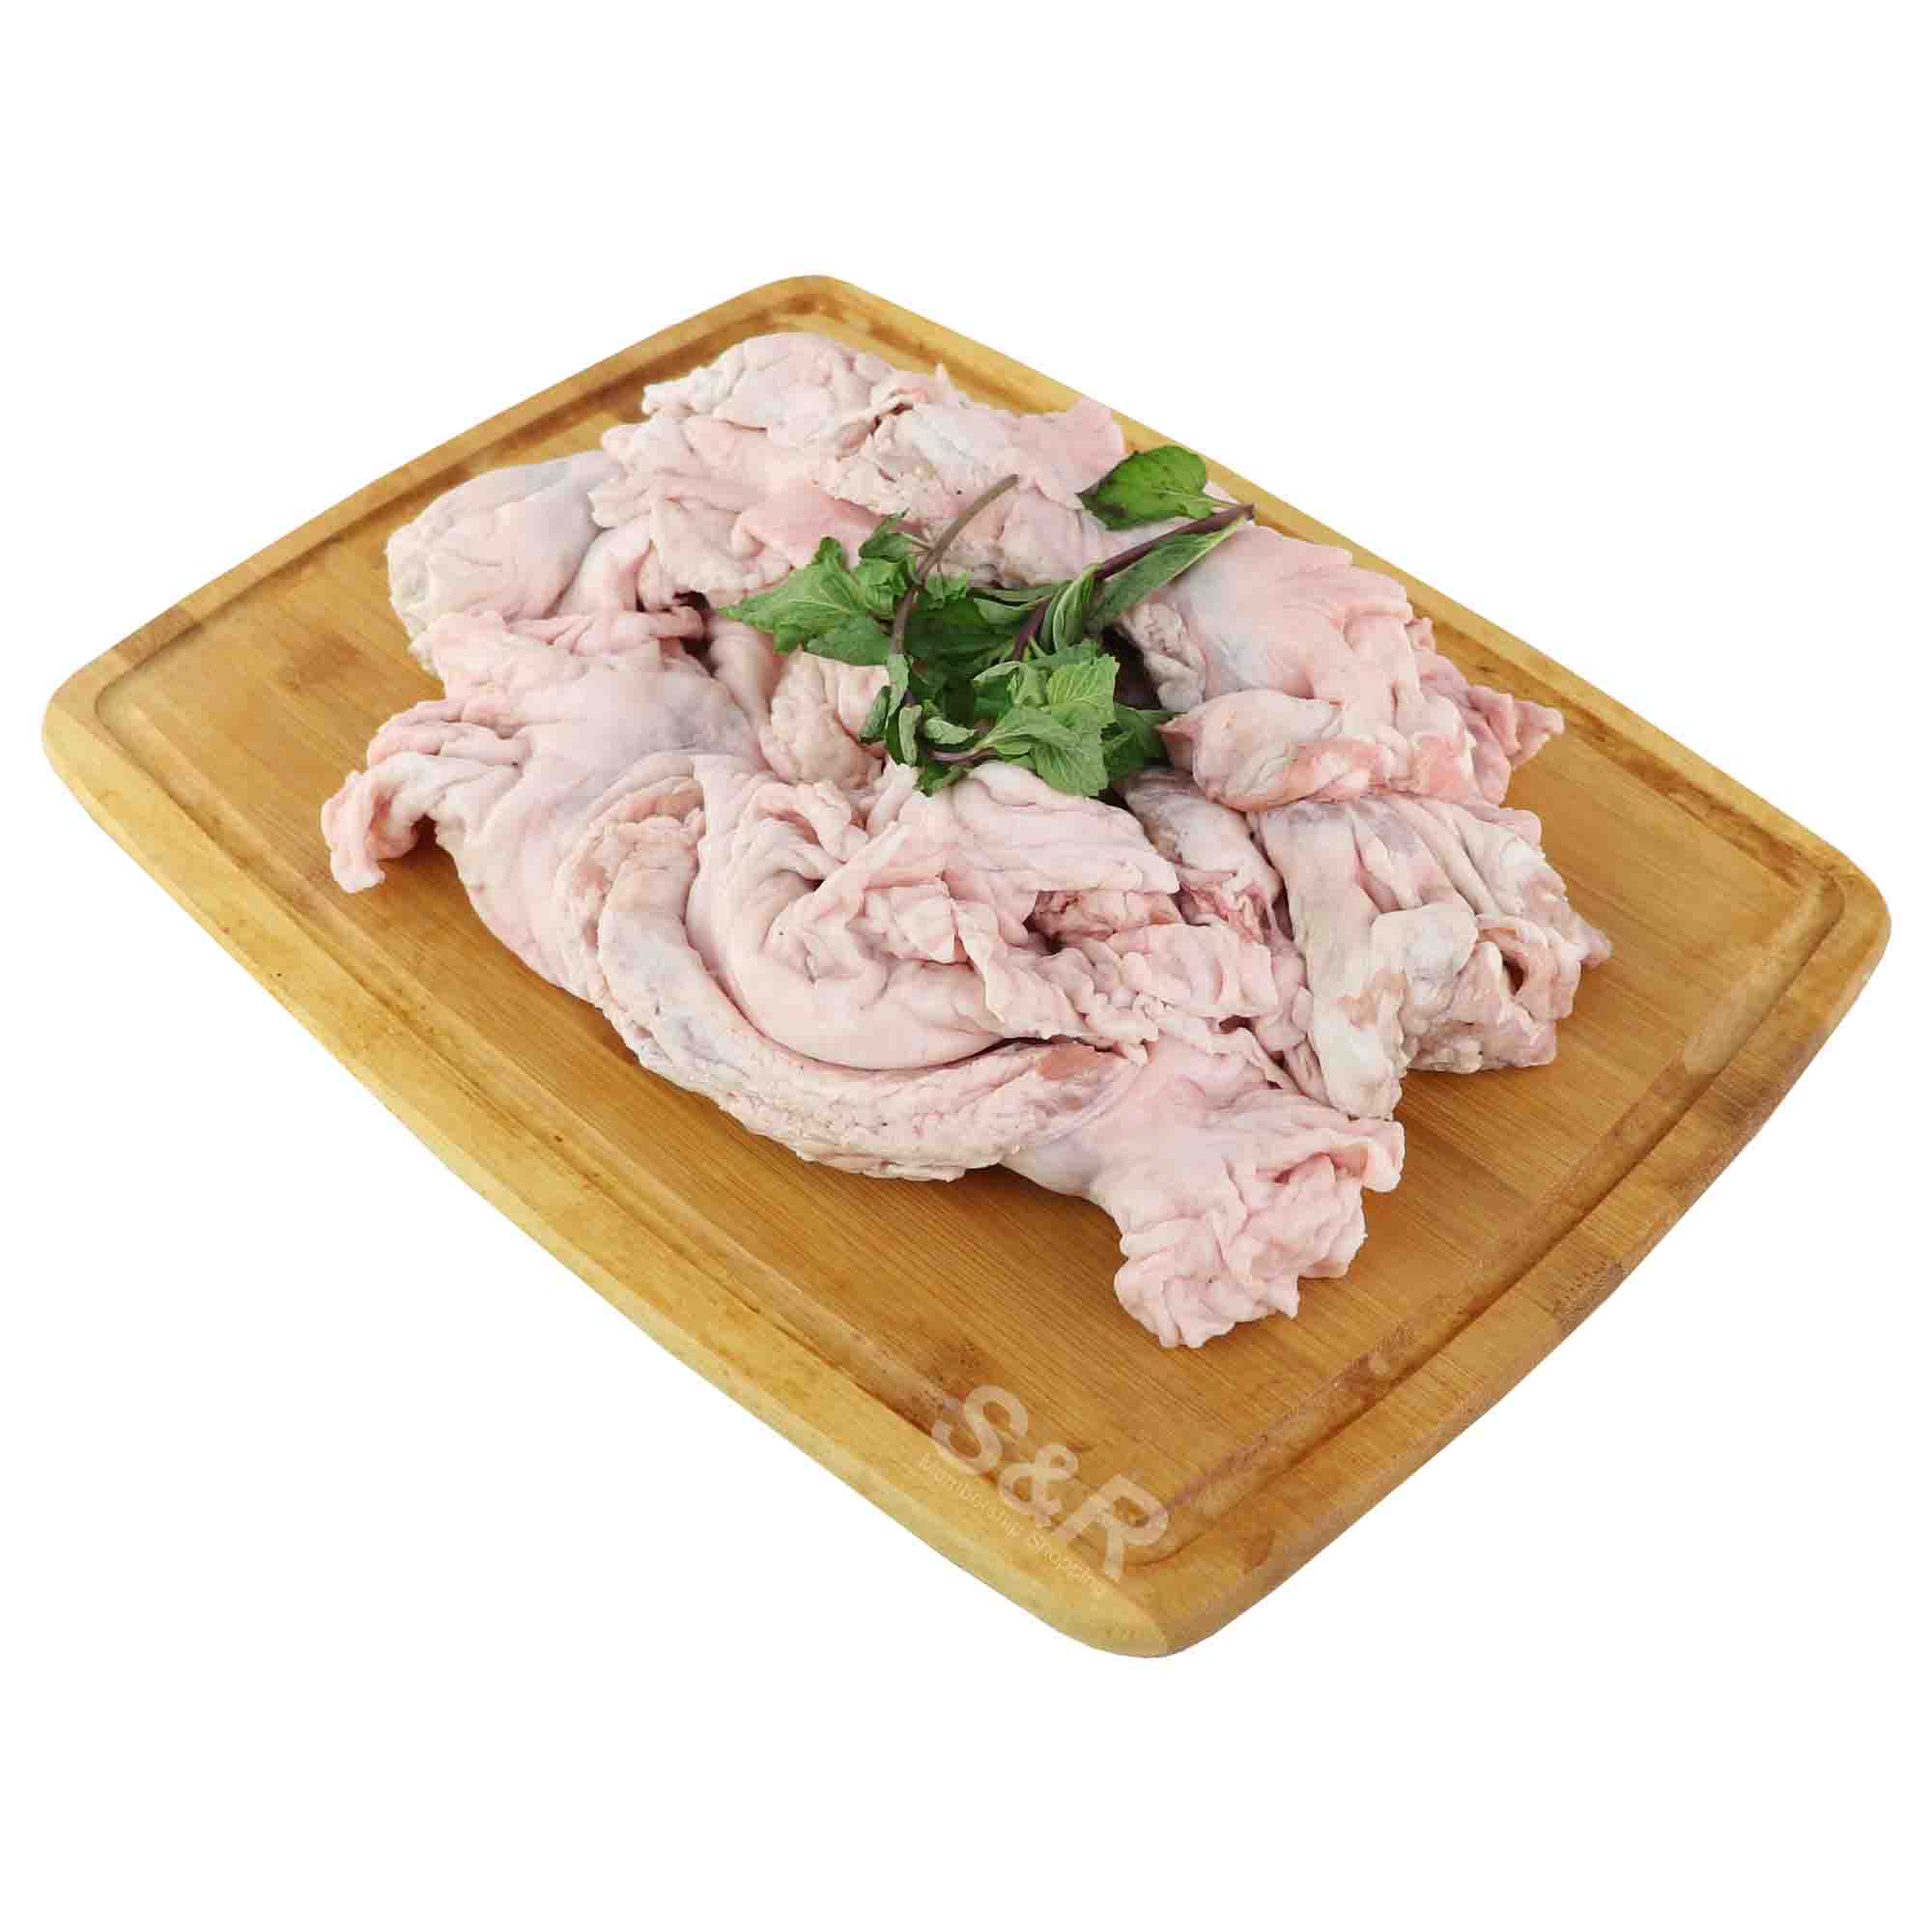 Member's Value Pork Flower Fat approx. 5kg